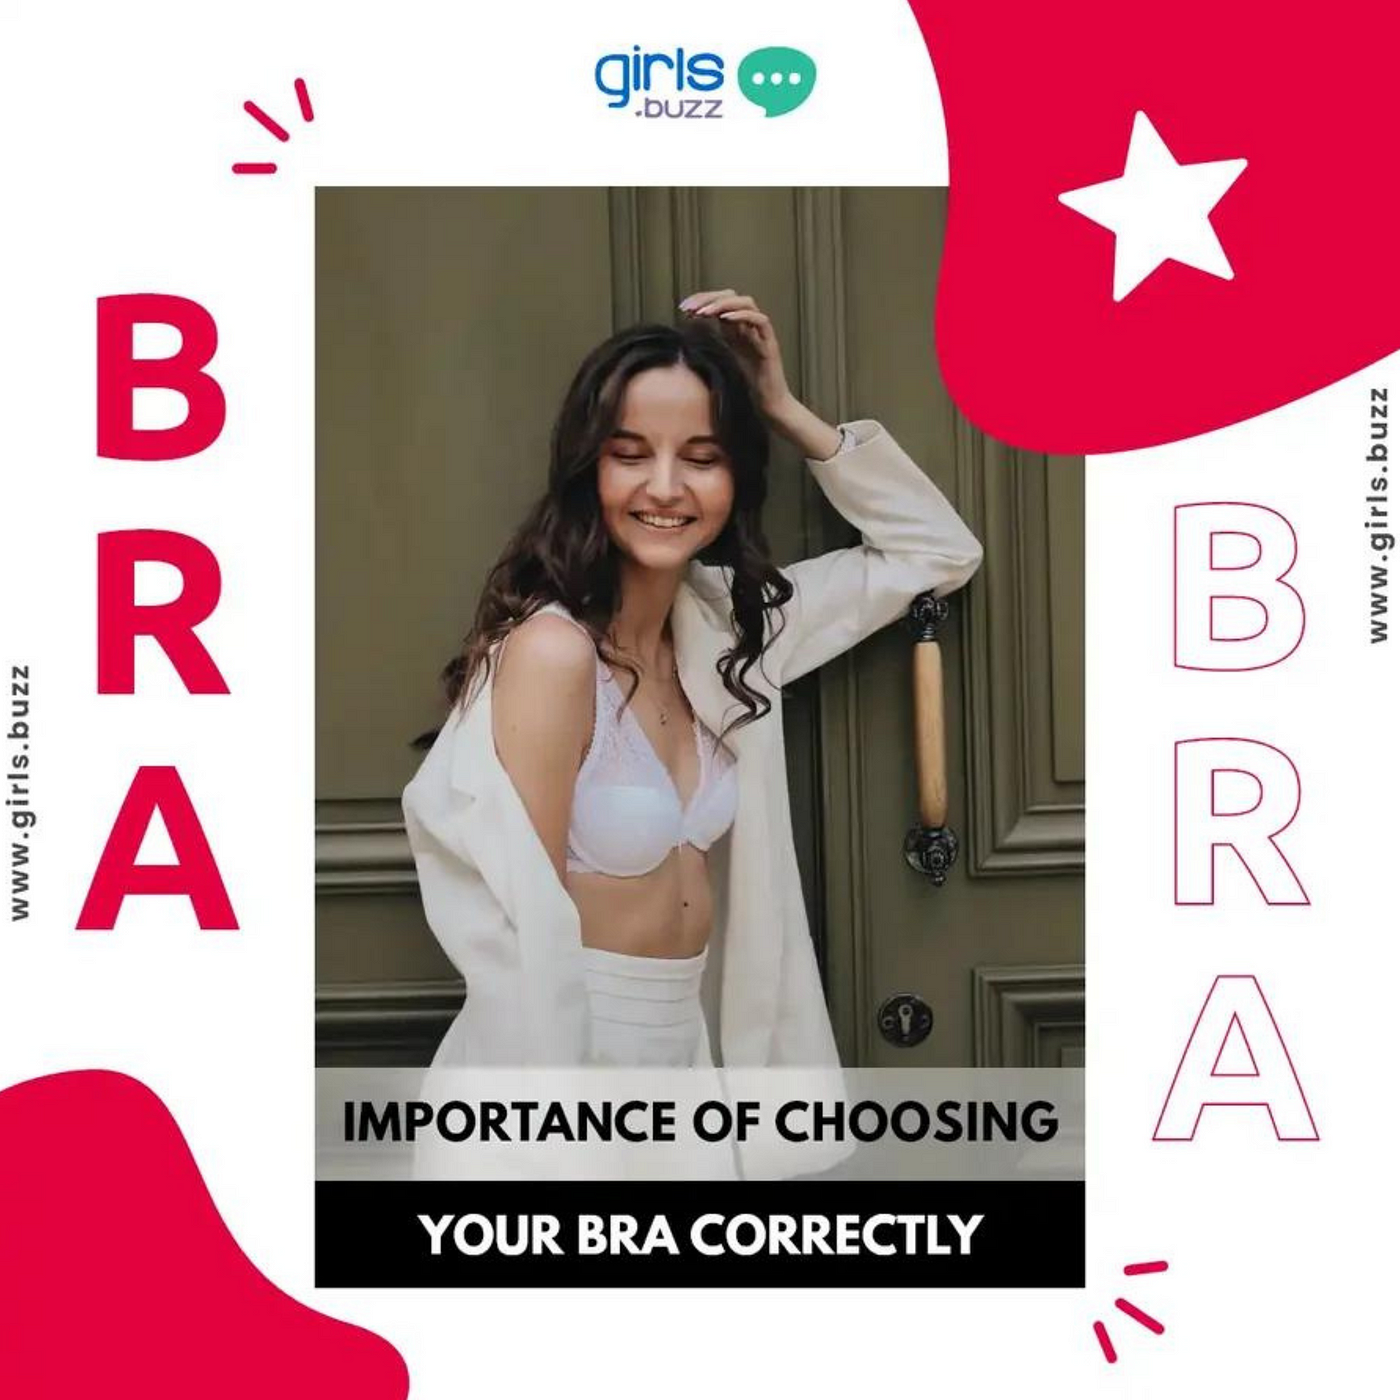 Importance of Choosing a Correct Bra, by Girls Buzz